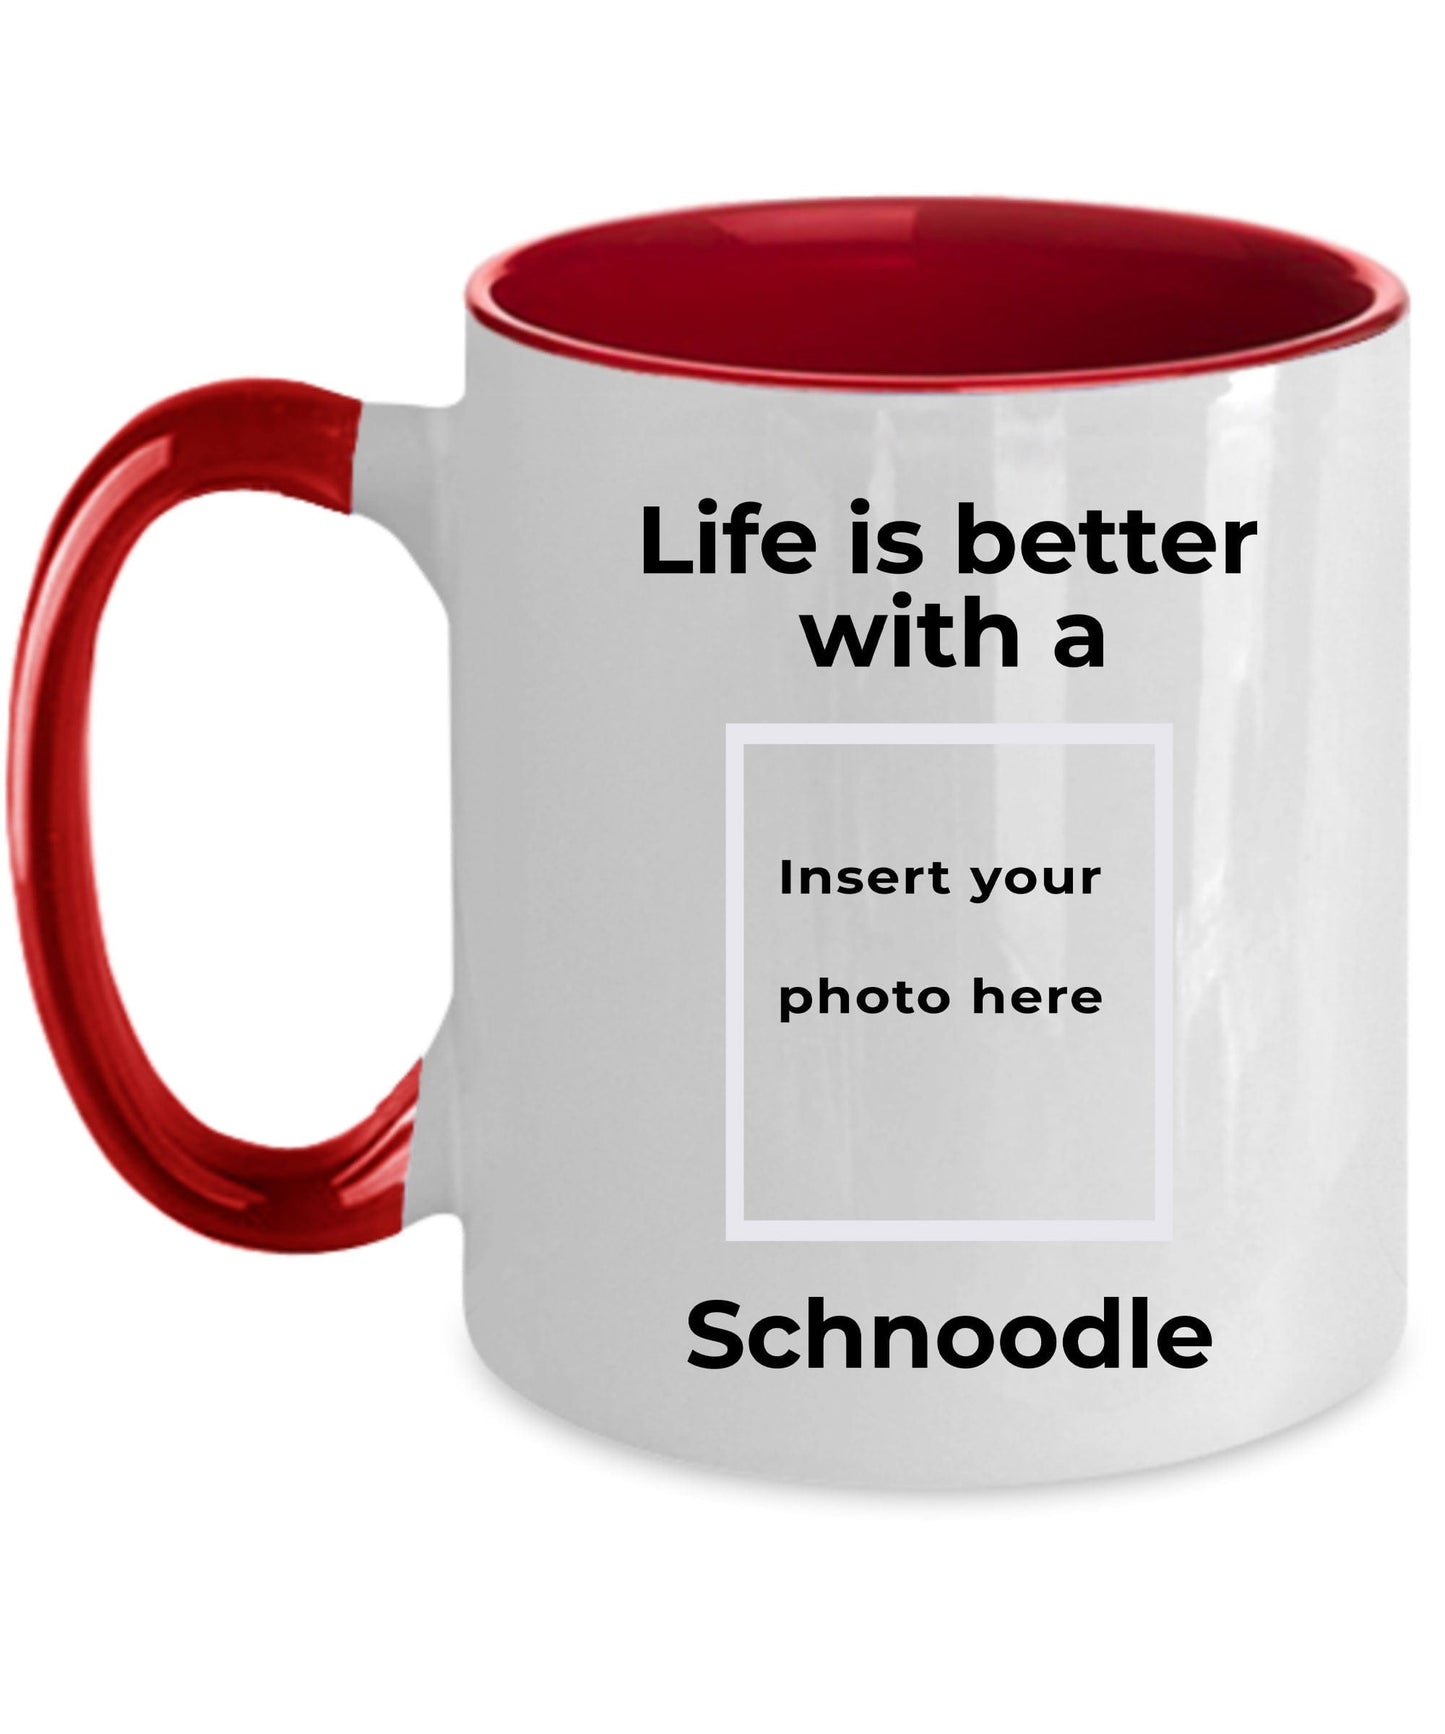 Schnoodle Black Dog Coffee Mug - Life is Better